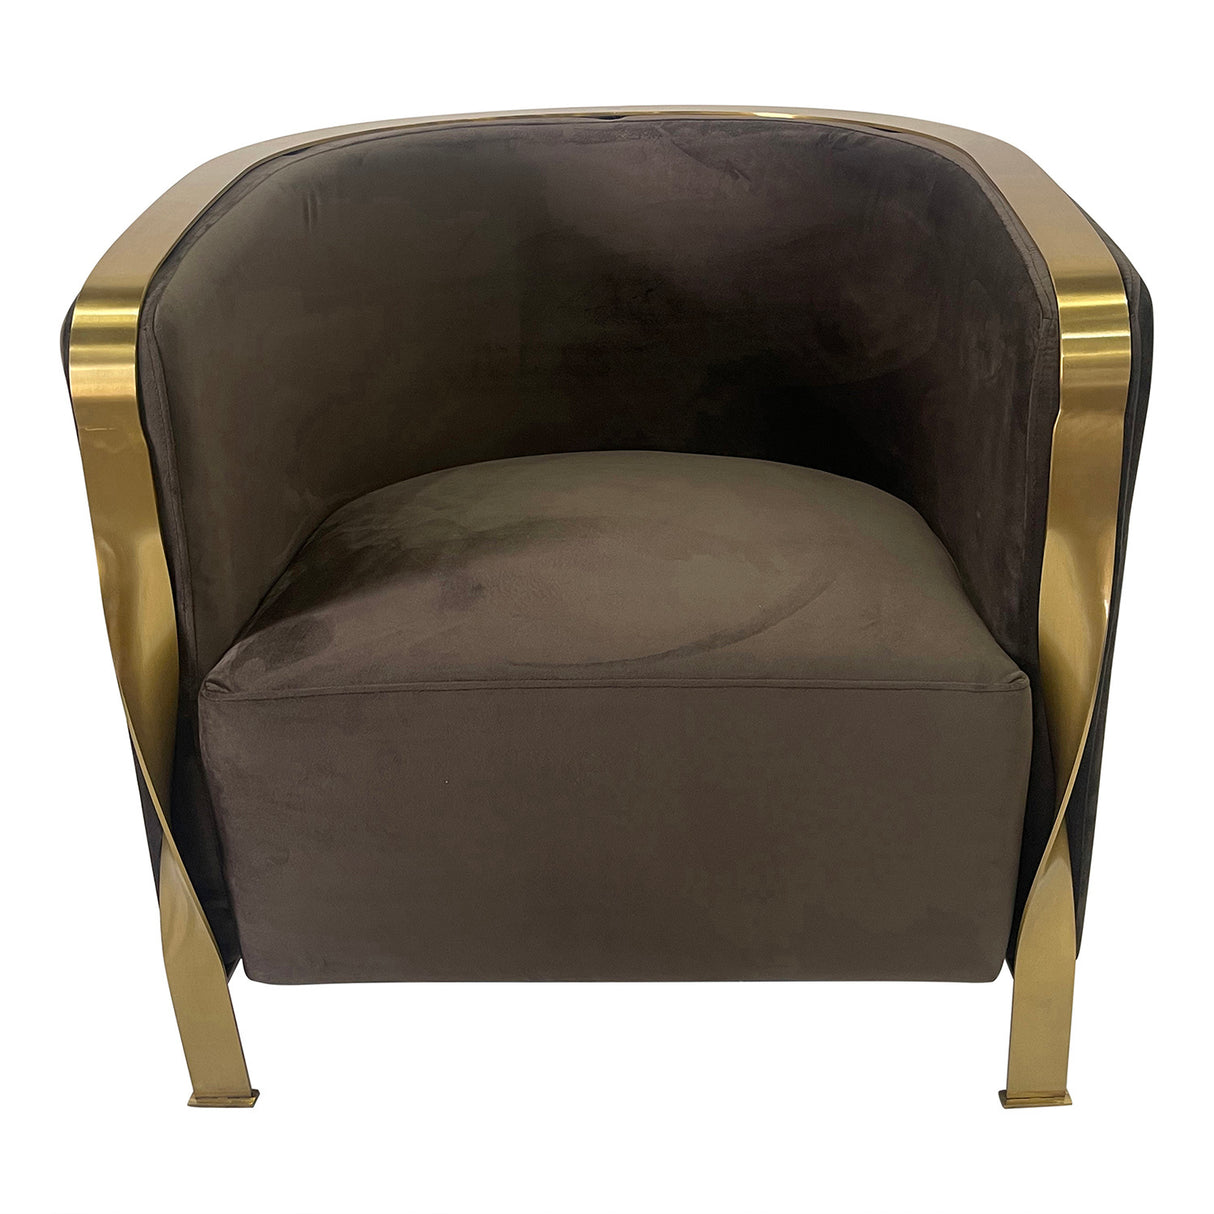 Brown and Gold Sofa Chair - Home Elegance USA